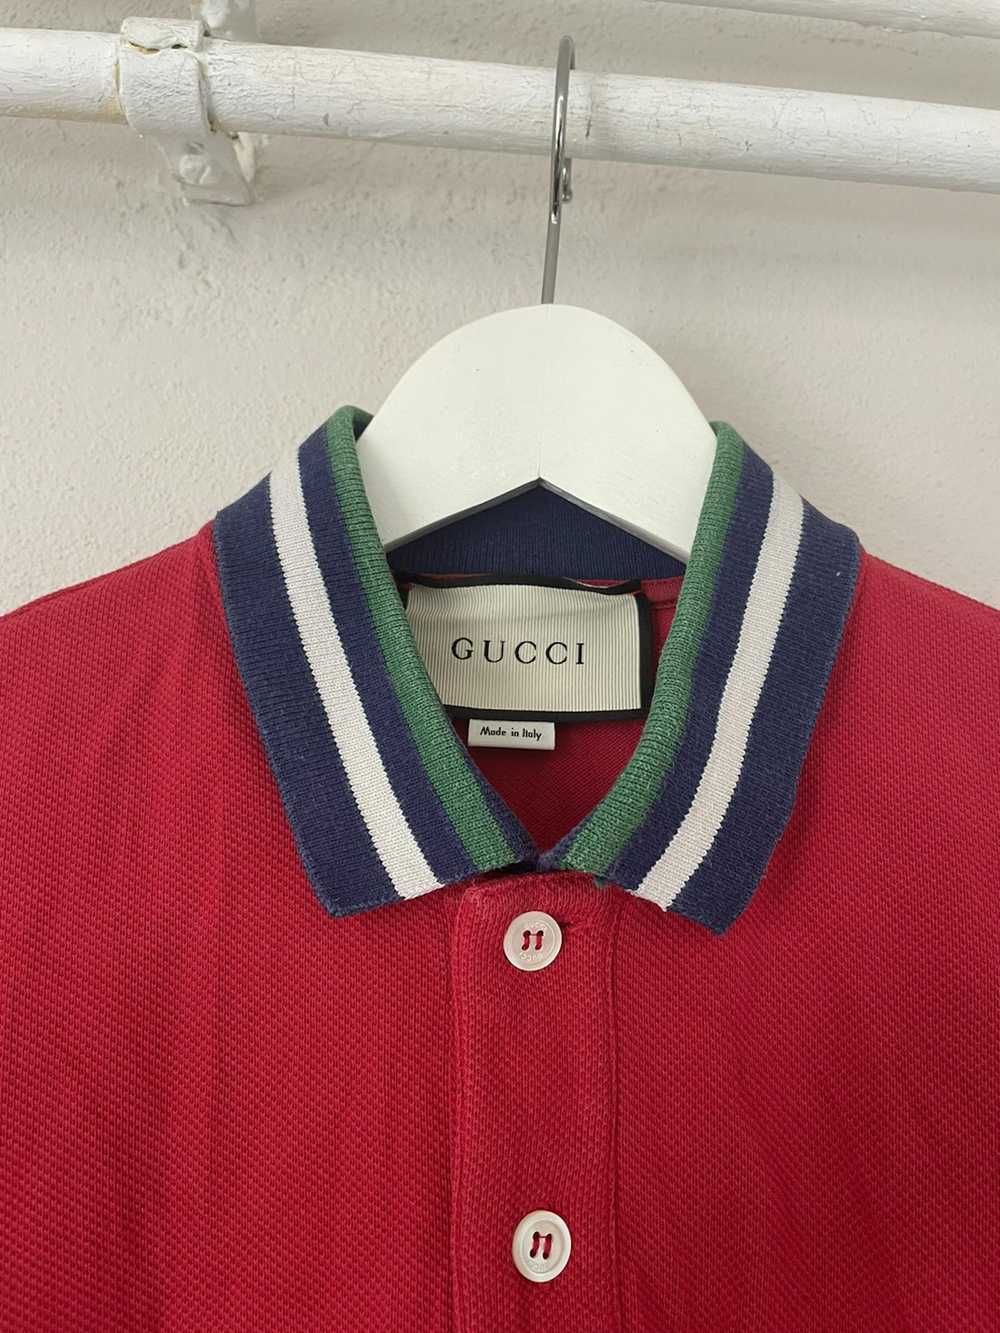 Gucci Red Rubber Logo Polo - image 6